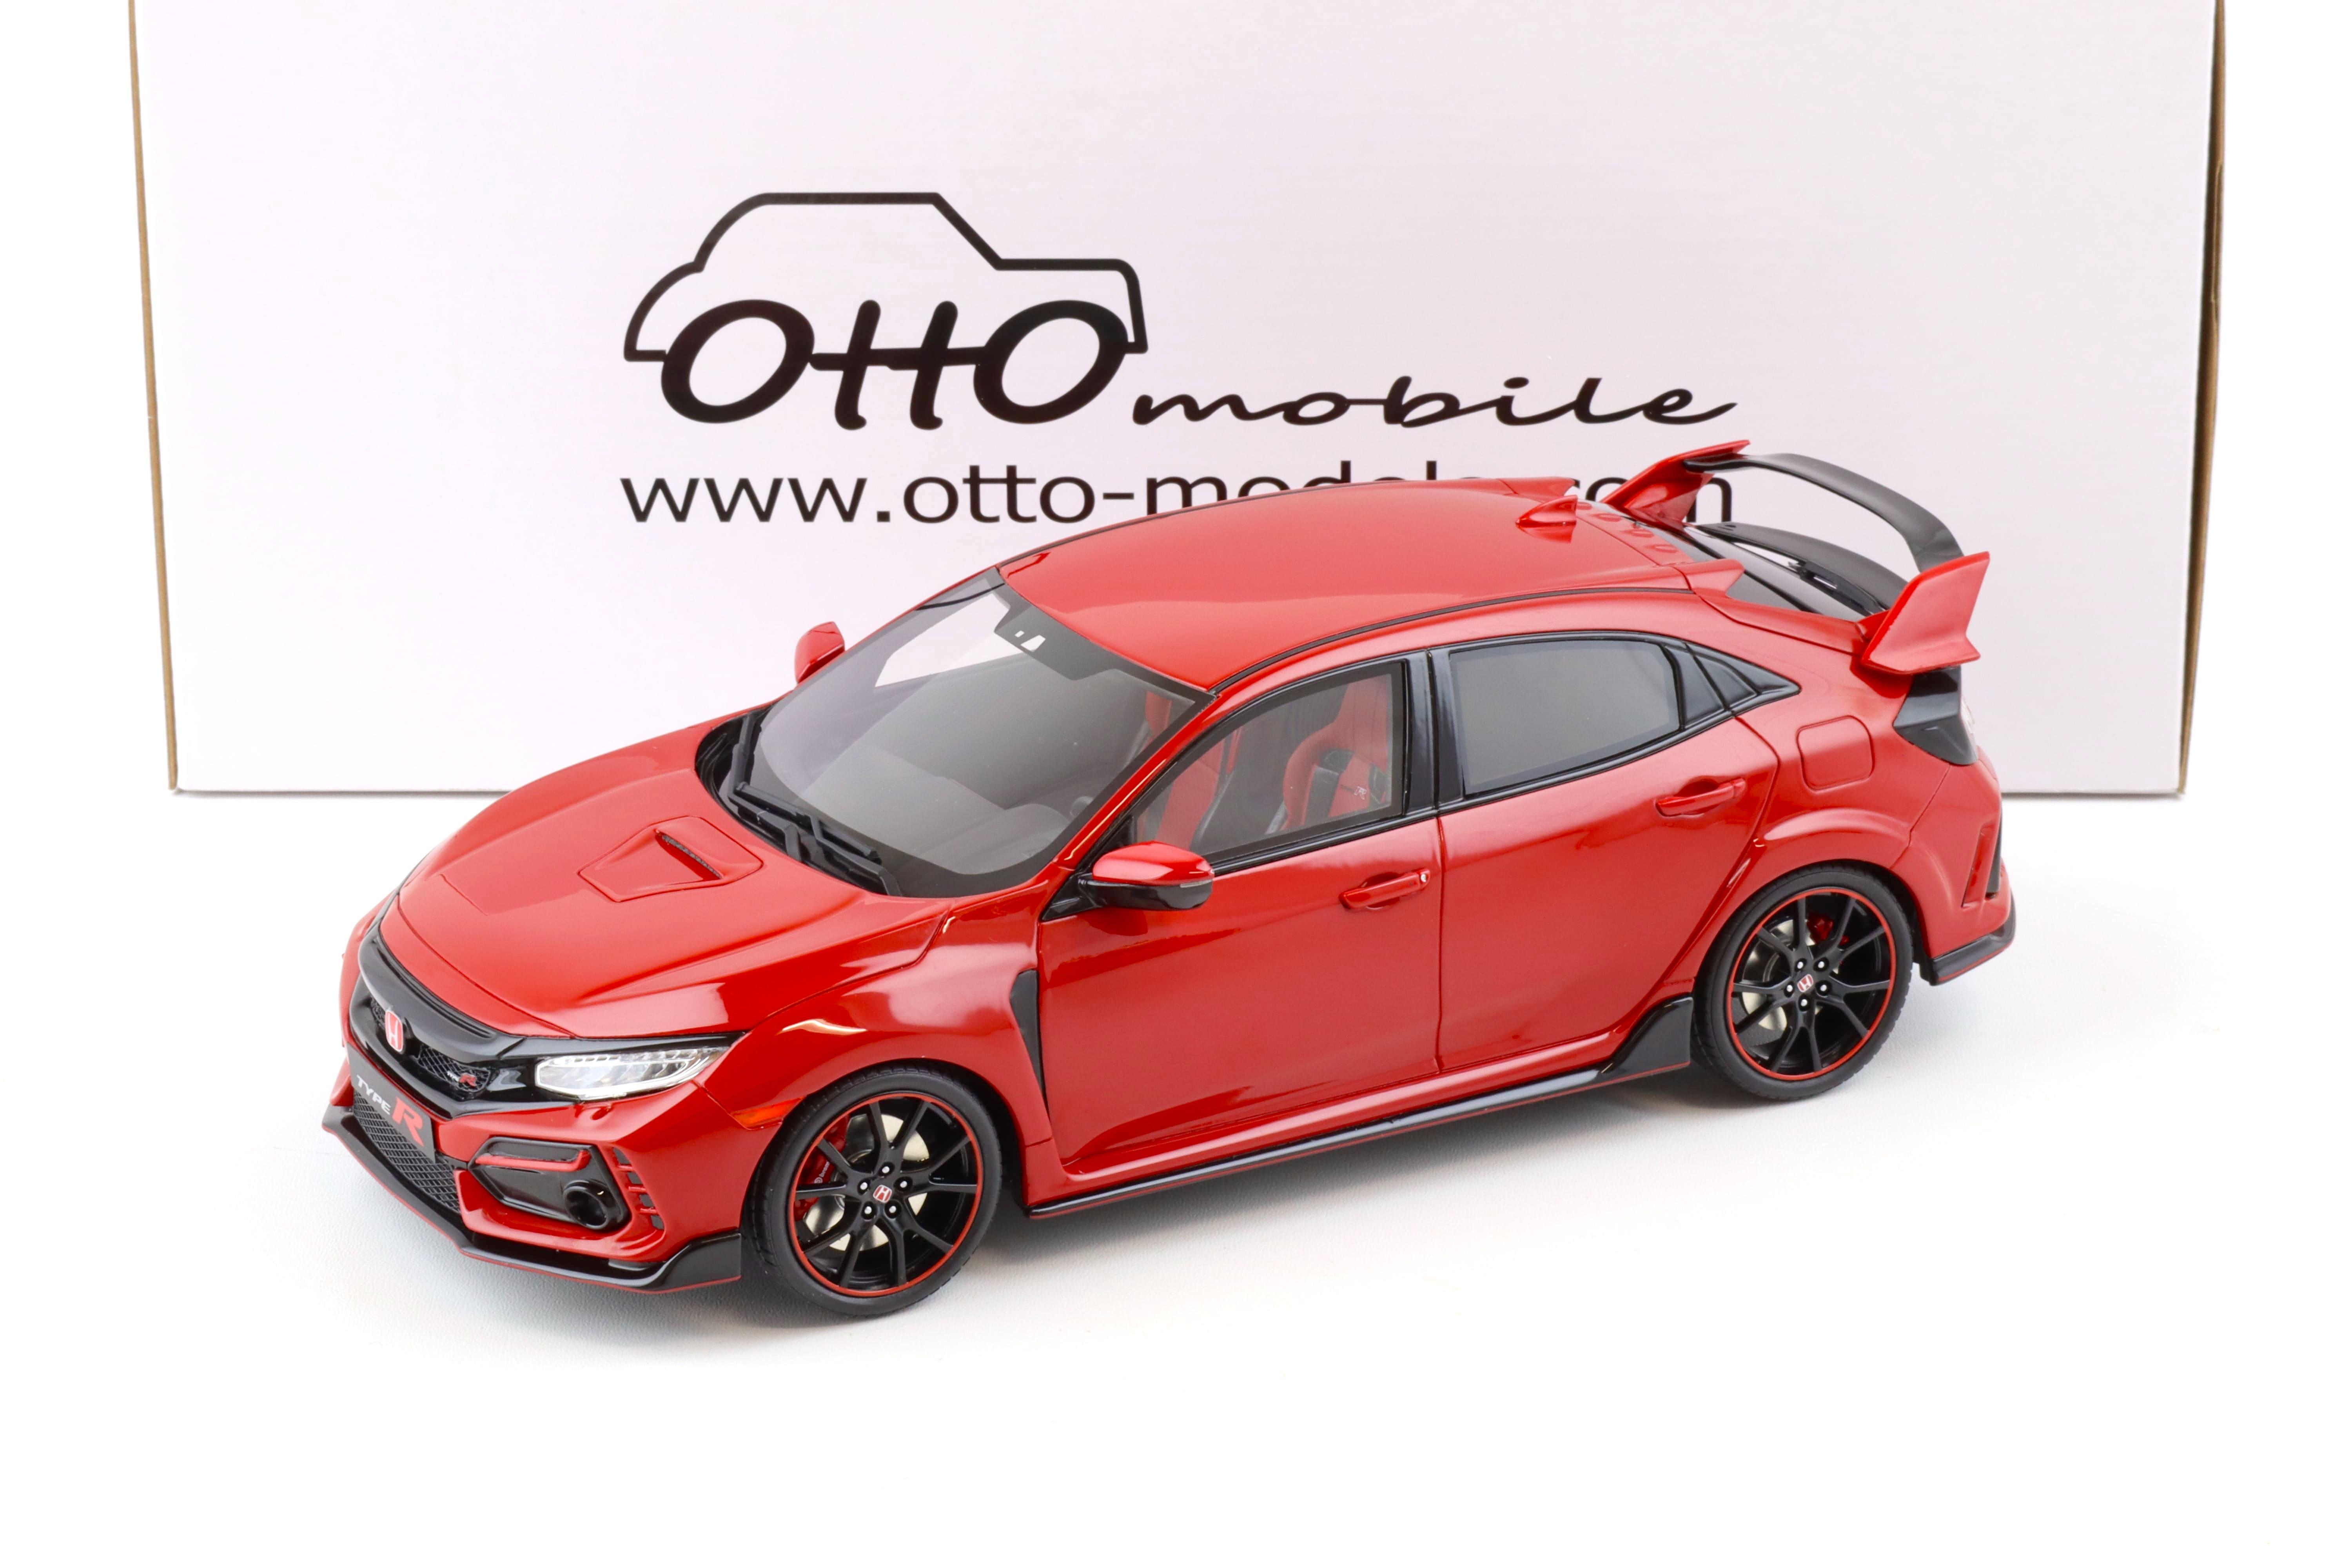 1:18 OTTO mobile OT890 Honda Civic Type R GT FK8 Euro Spec red 2020